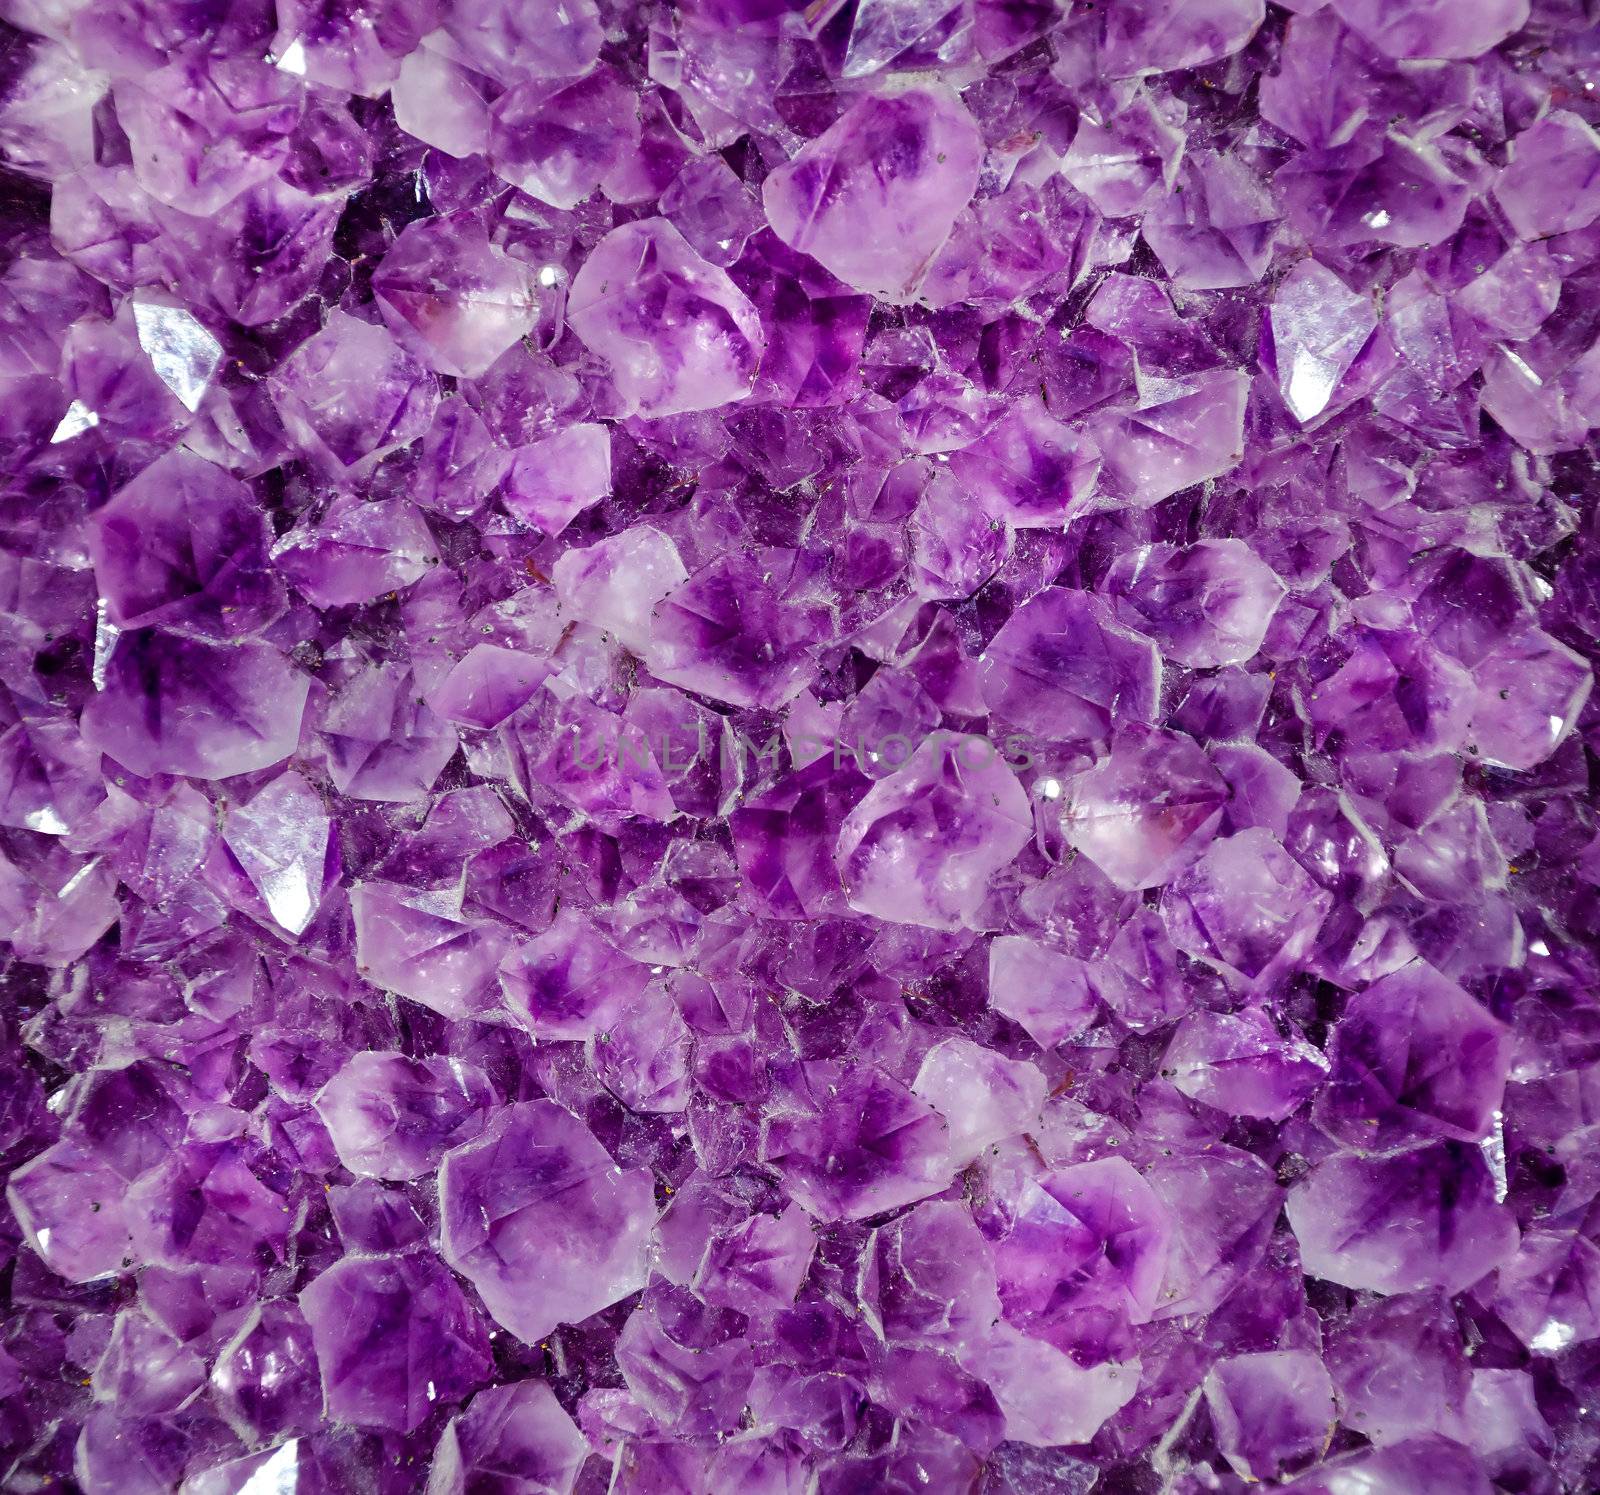 Natural amethyst crystal background. Amethyst is a violet variety of quartz